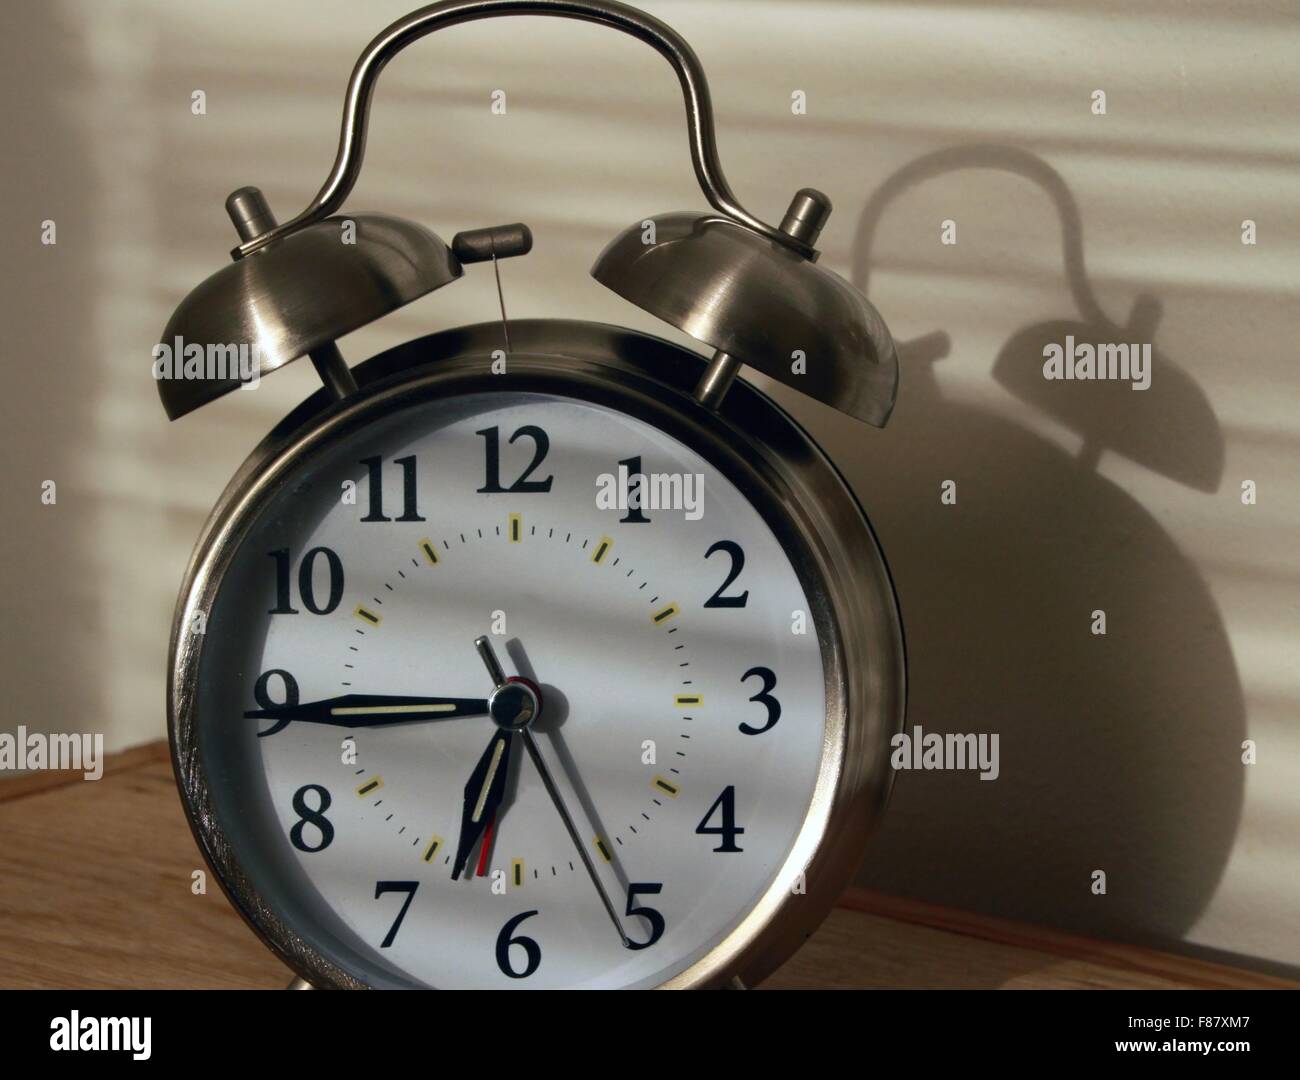 Analog alarm clock Stock Photo